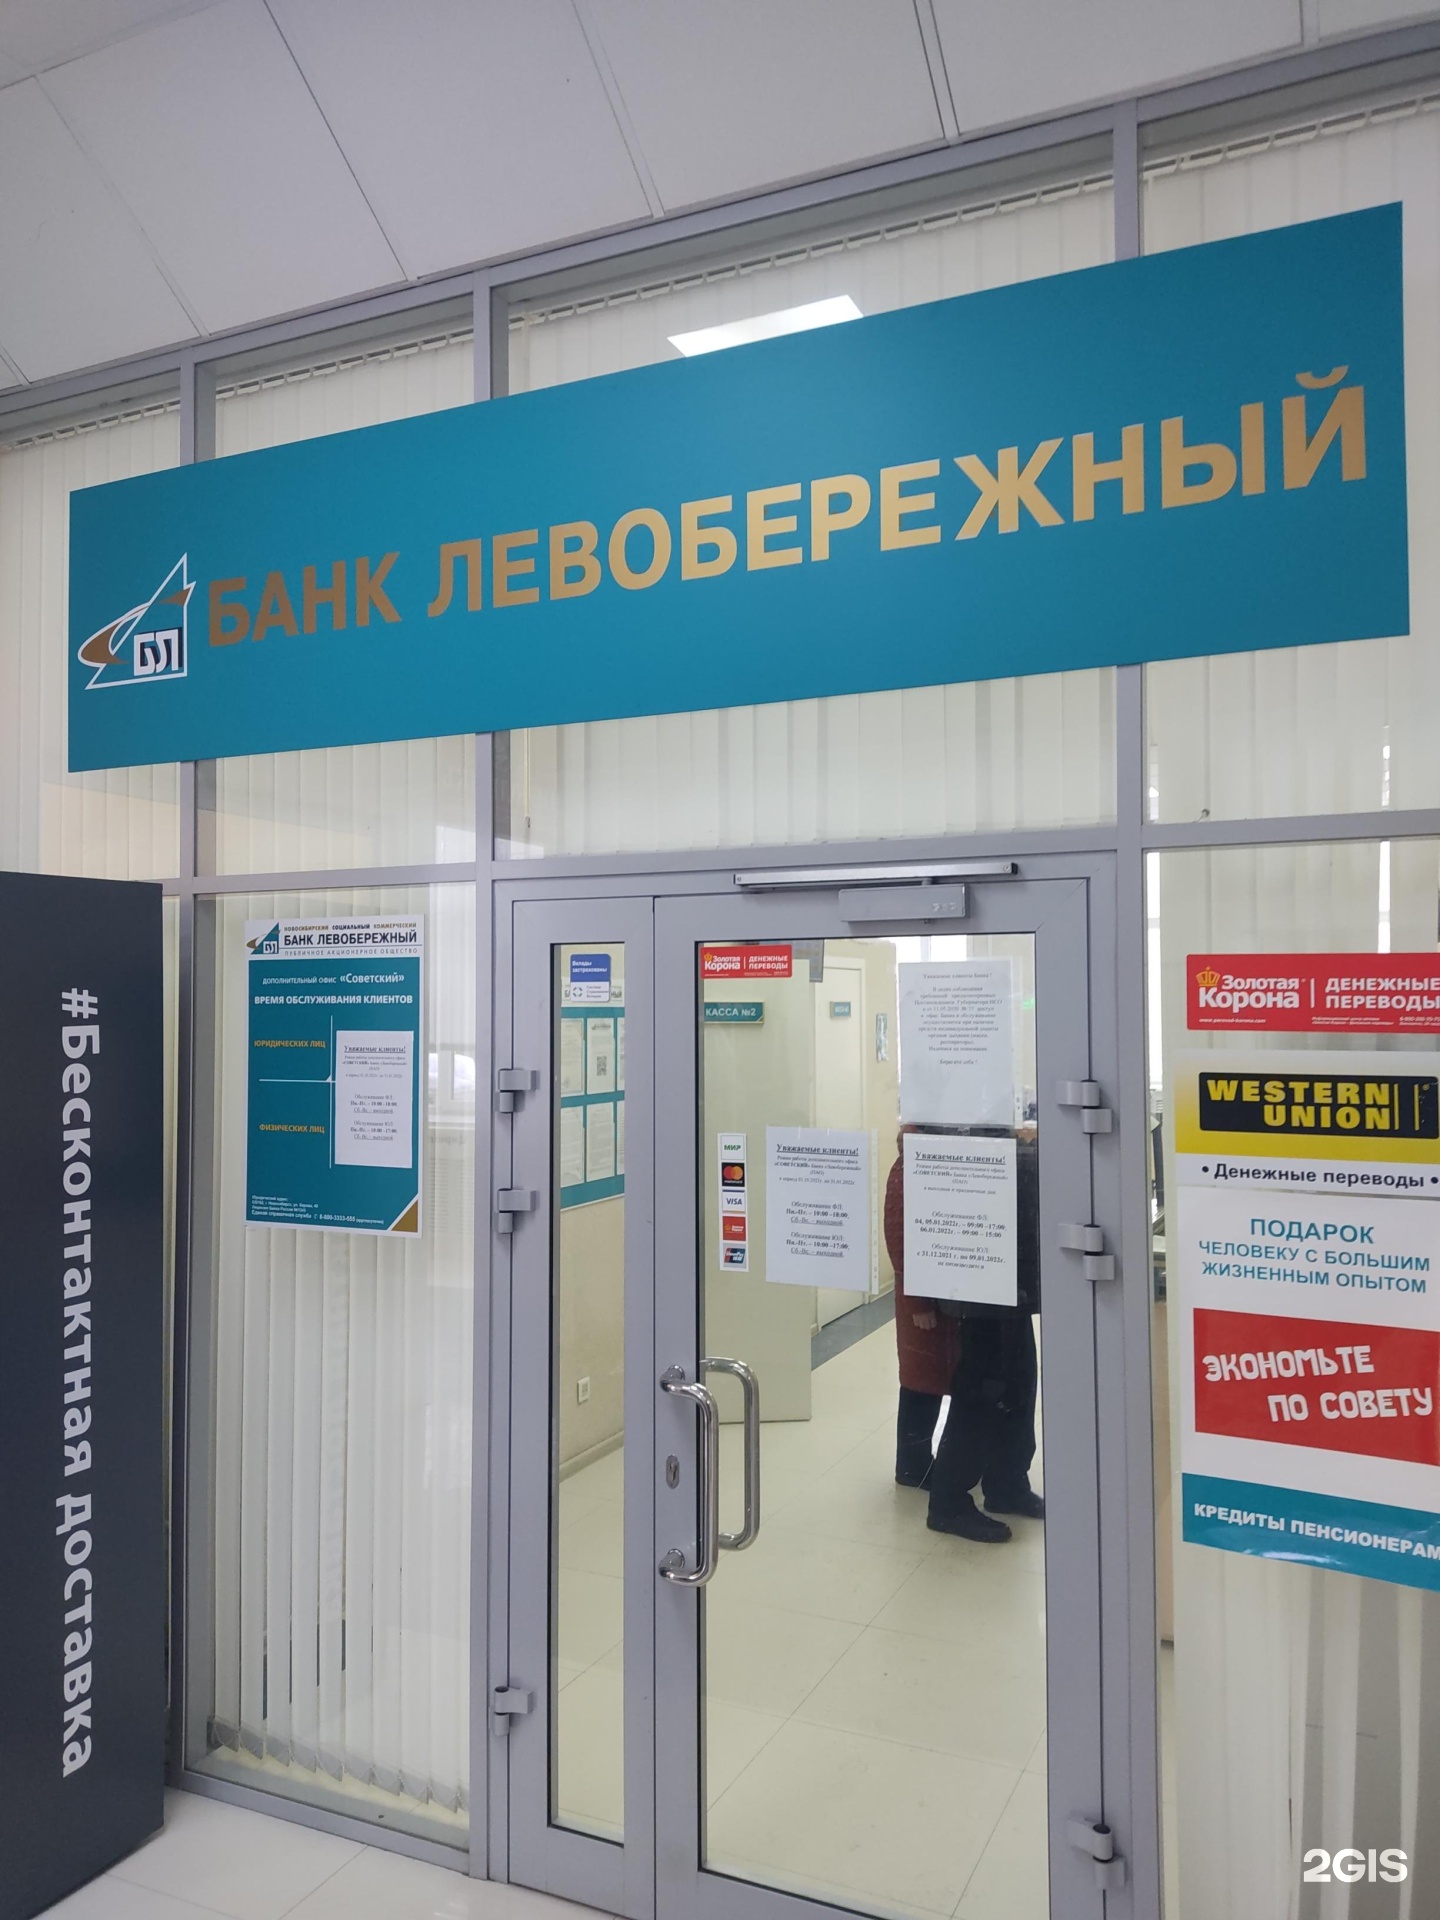 Банк левобережный кредитный. Банк Левобережный. Банк Левобережный Новосибирск. Банк Левобережный Ленинск-Кузнецкий. Банк Левобережный Искитим.